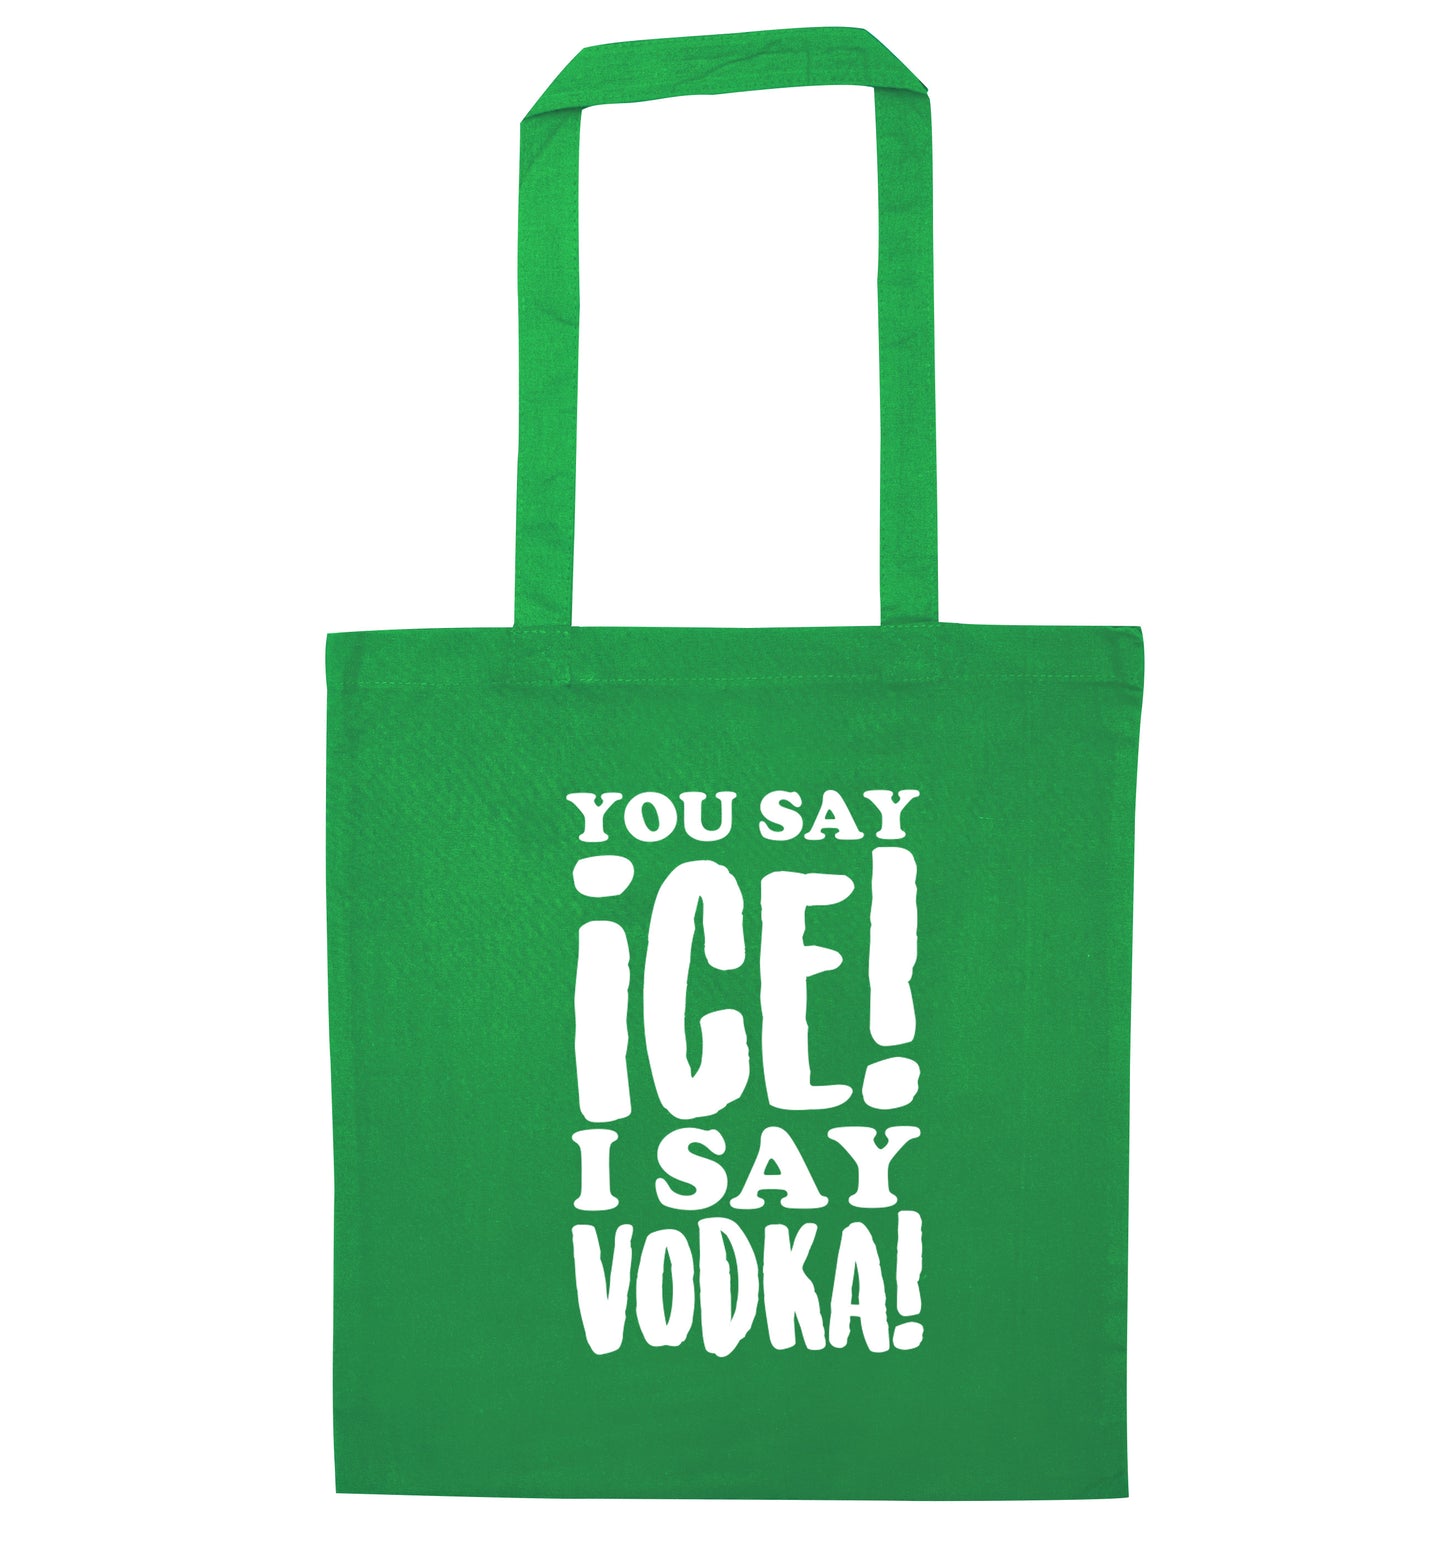 You say ice I say vodka! green tote bag